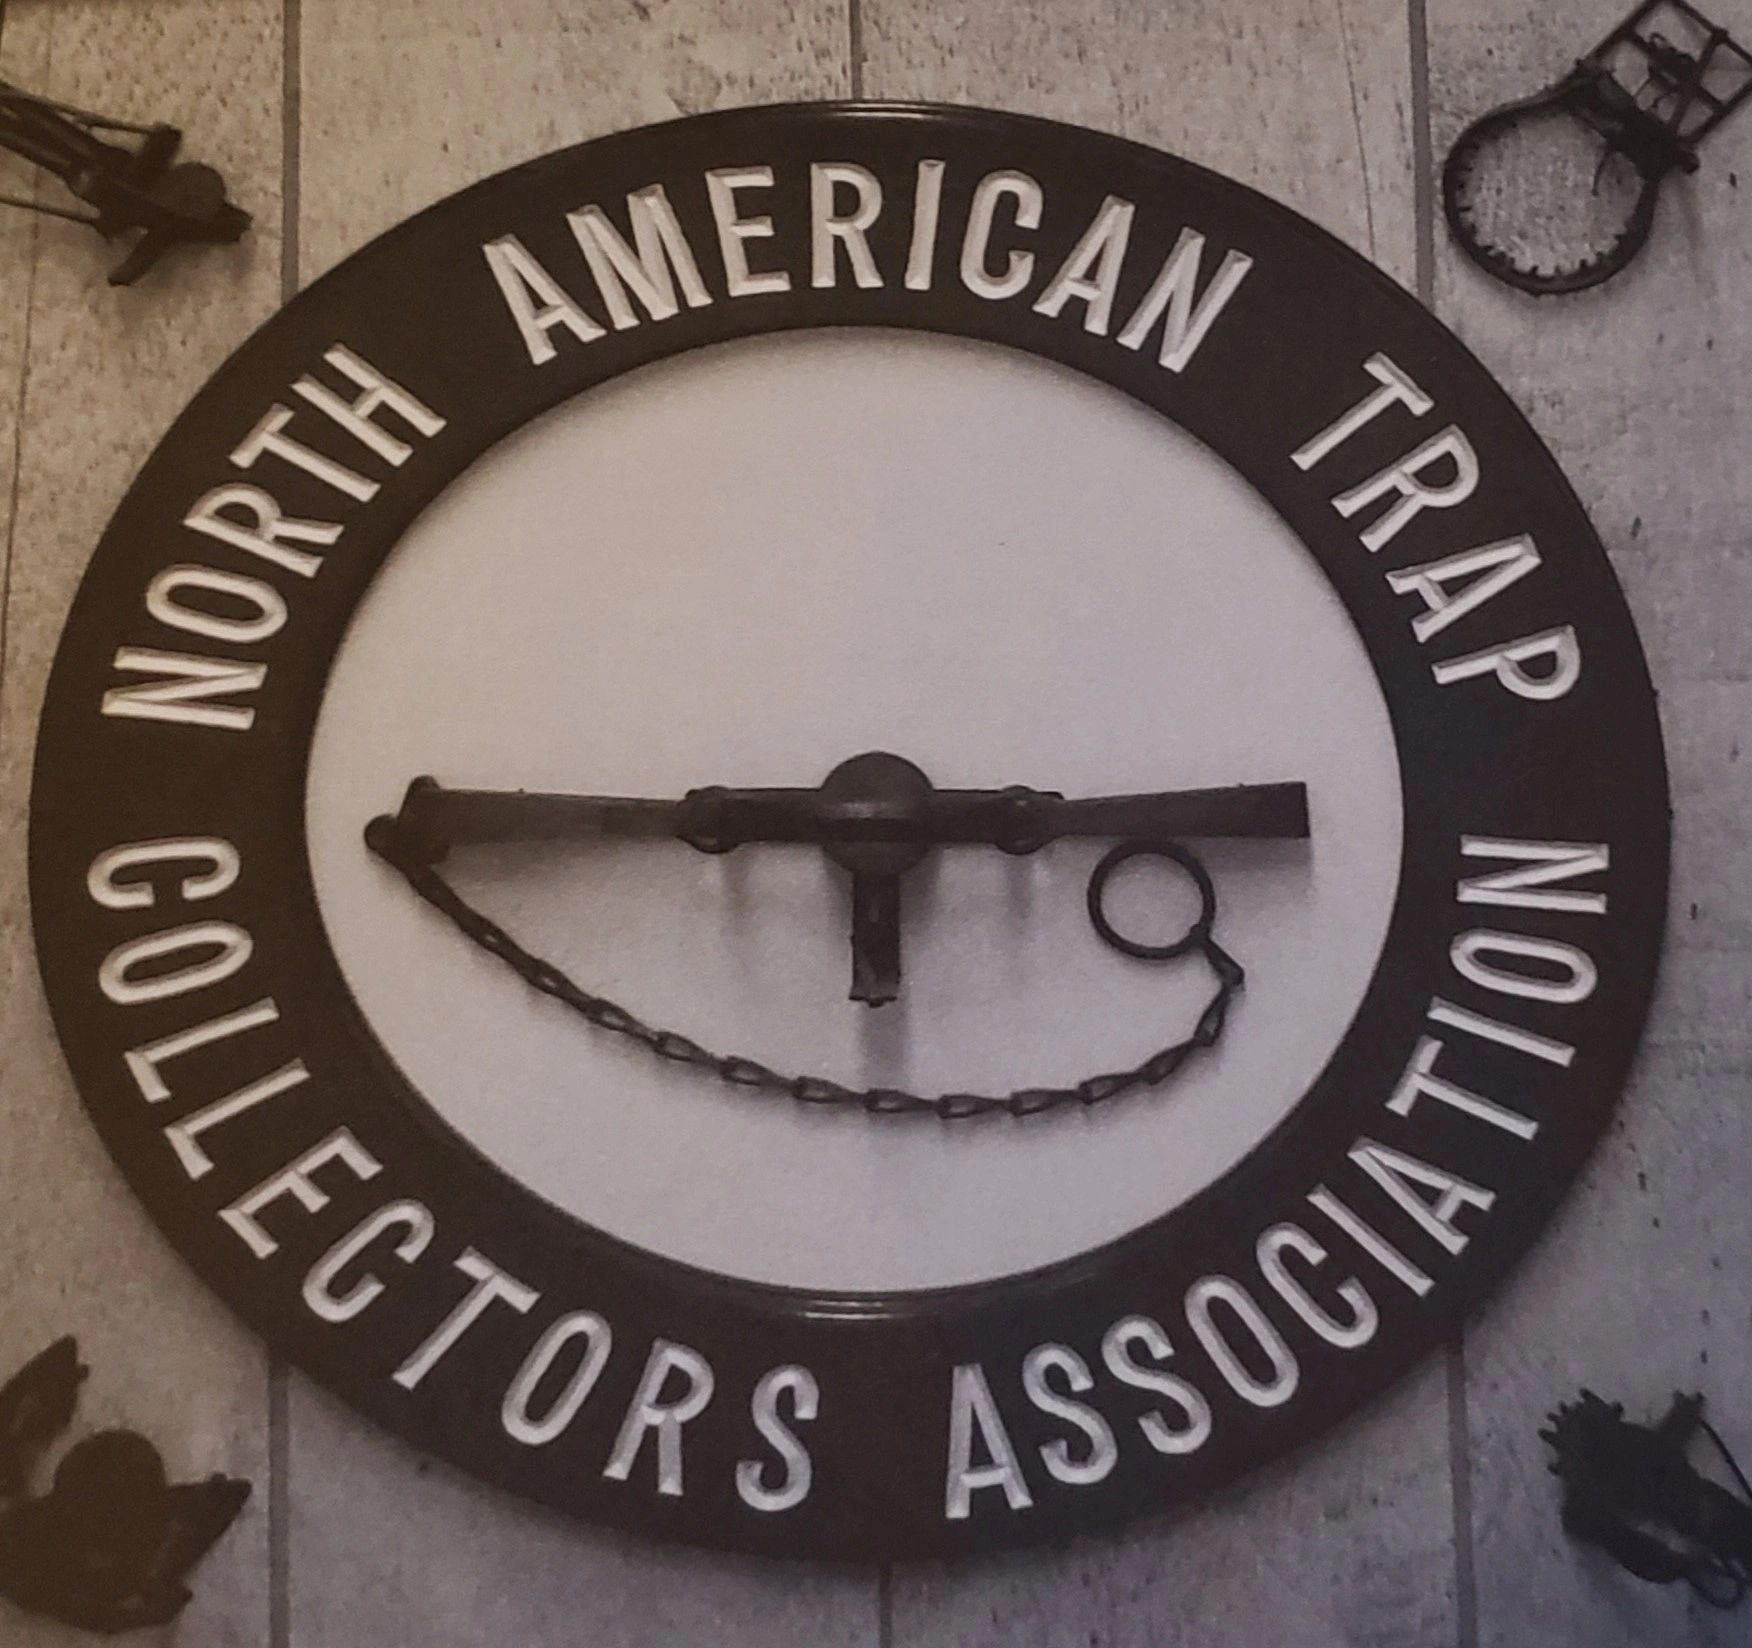 Membership - North Carolina Trappers Association, Inc.